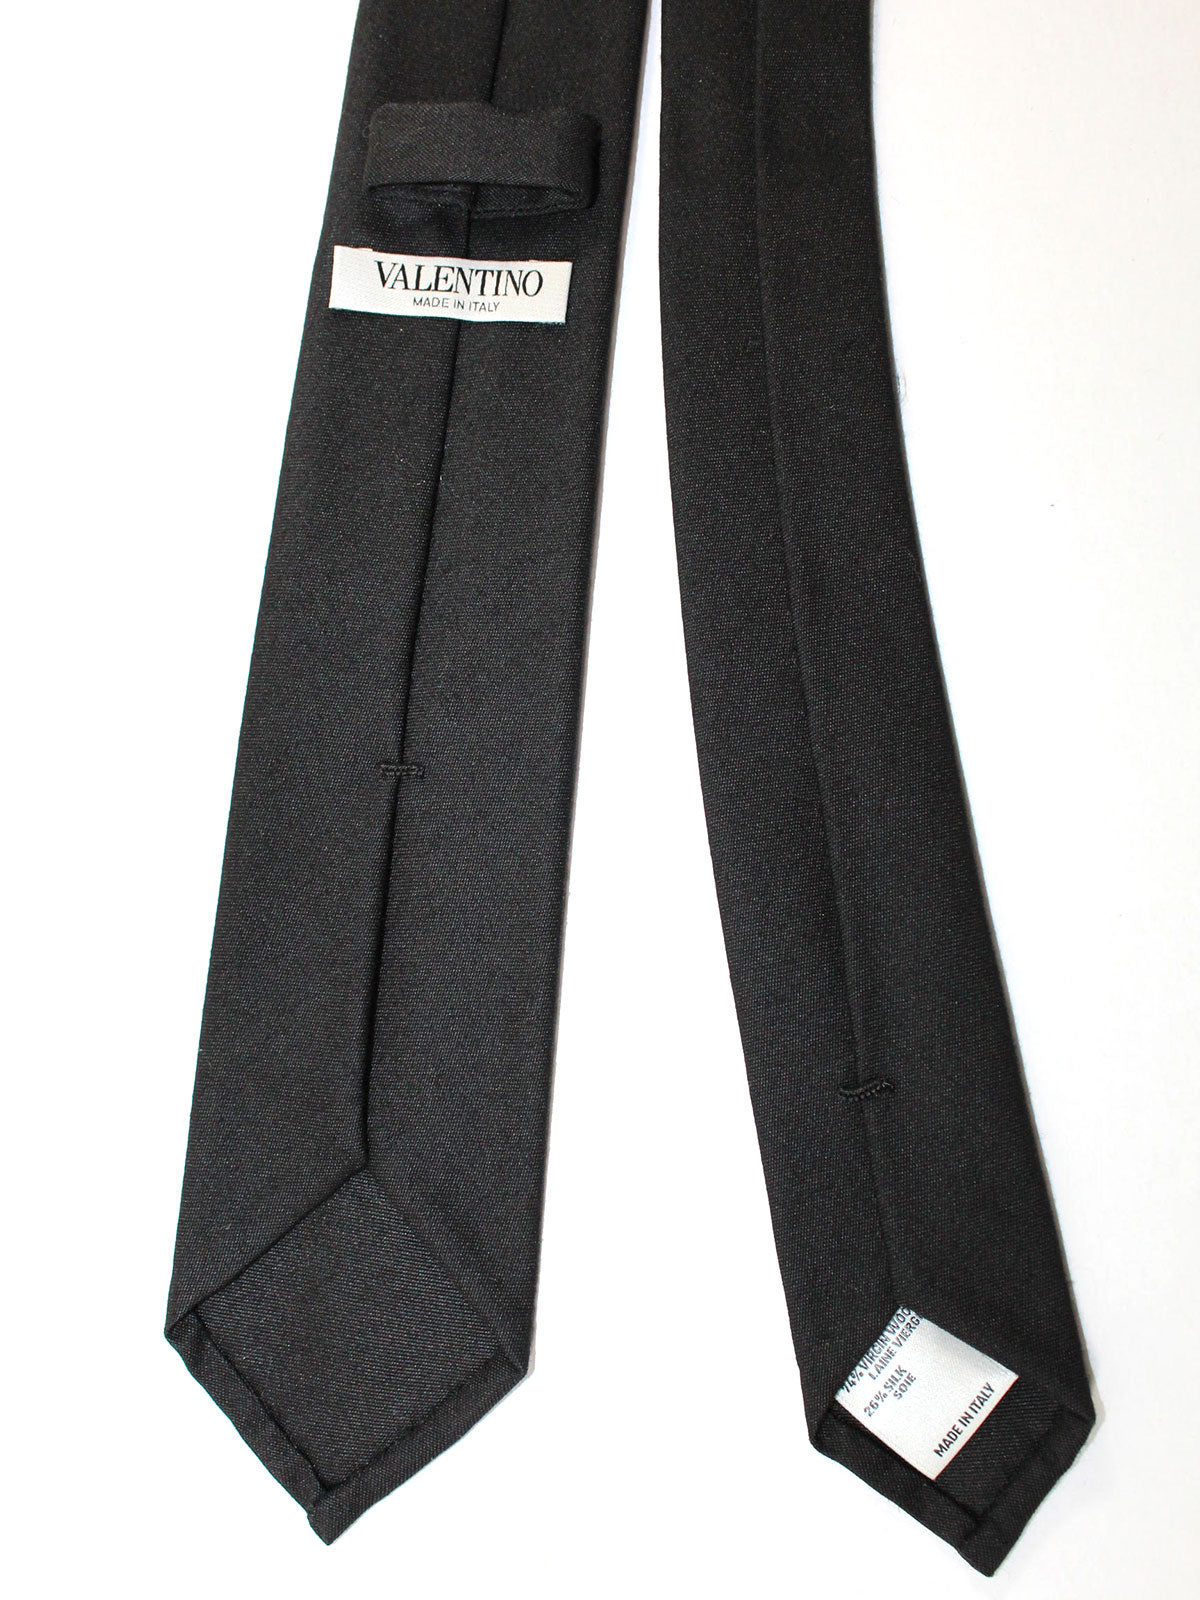 Valentino Ties | Discount Valentino Men - Tie Deals